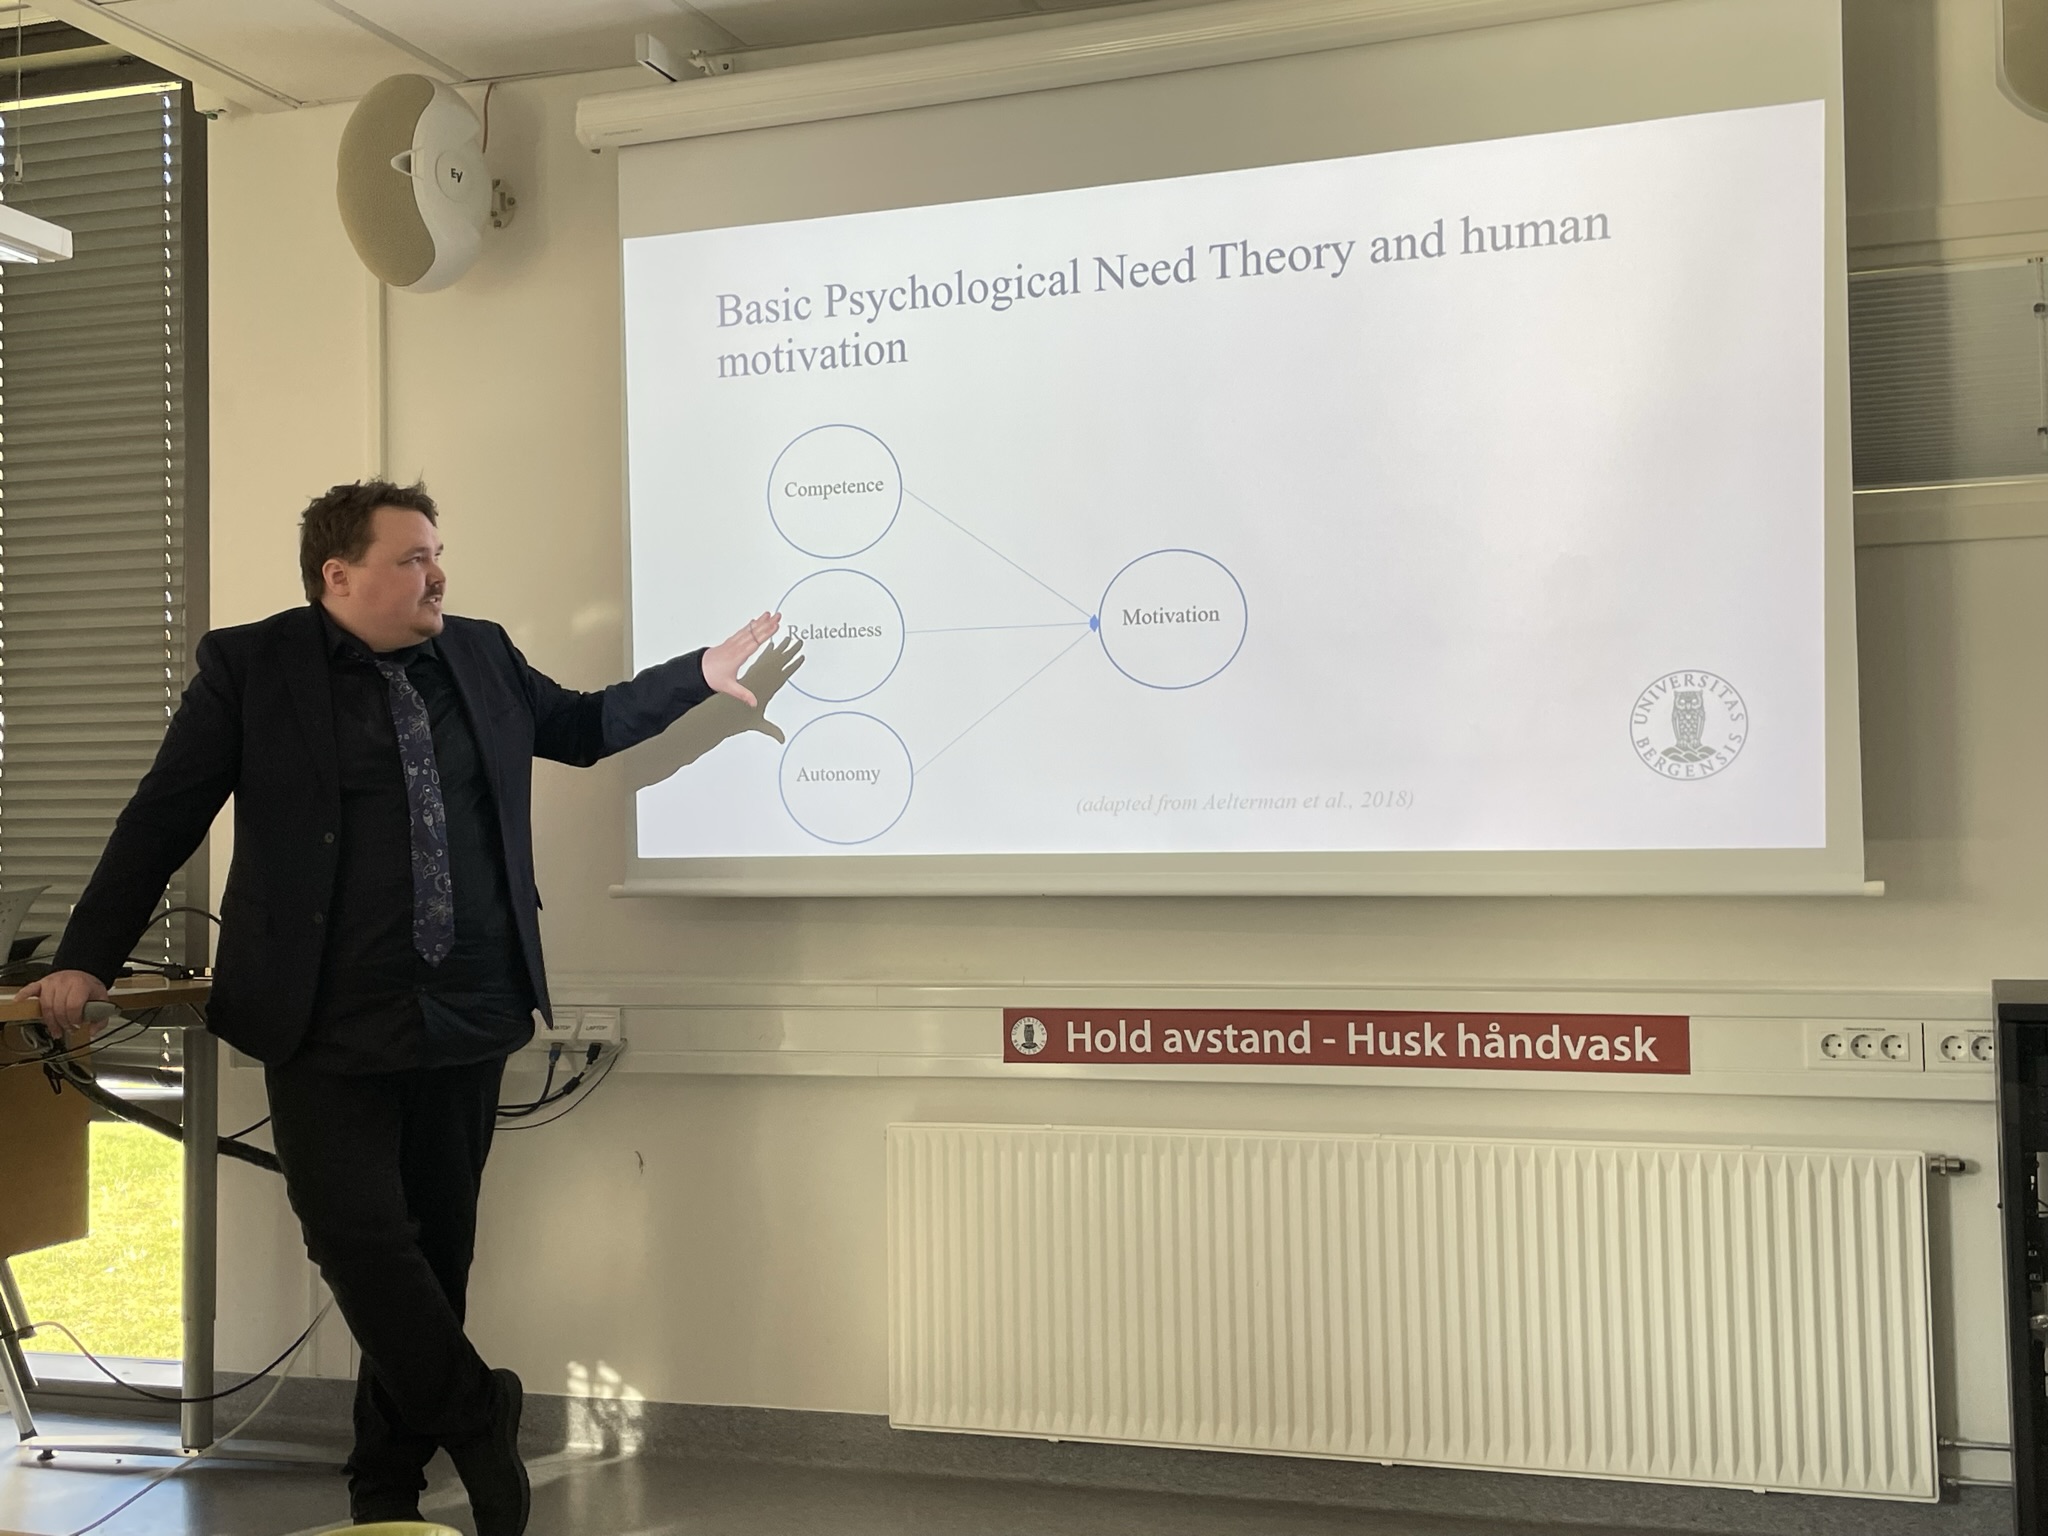 Marius Ole Johansen presents his trial lecture